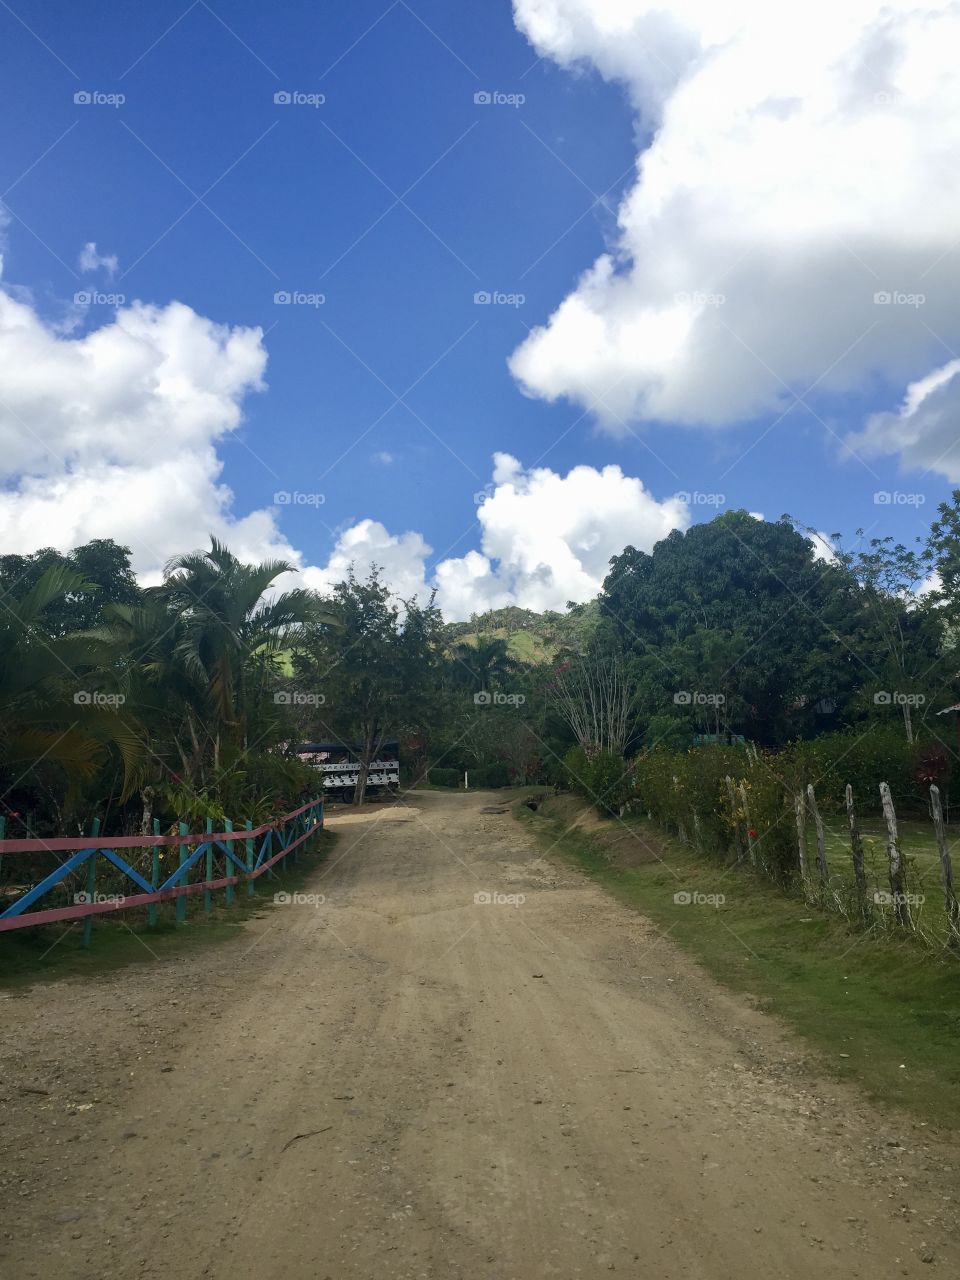 Dominican Republic rural road